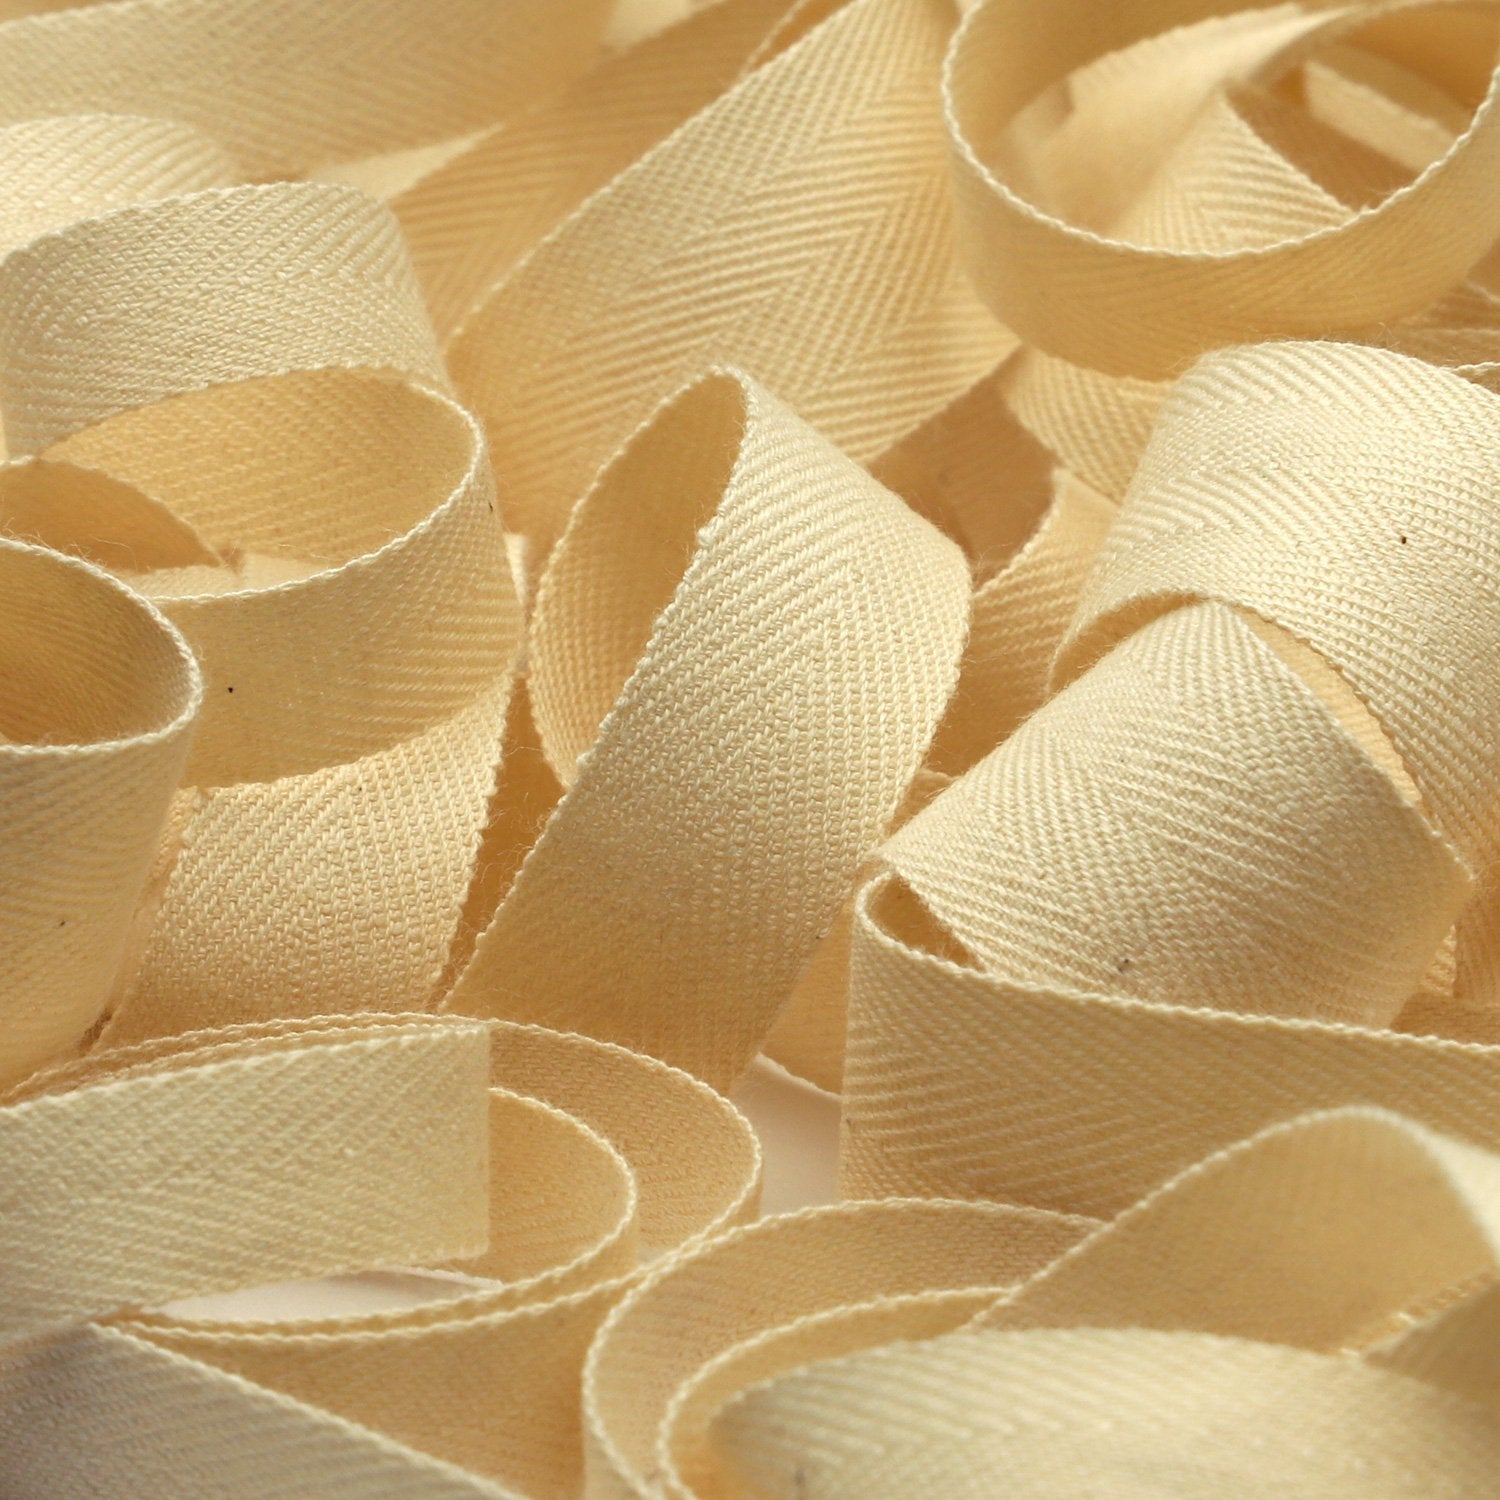 FUJIYAMA RIBBON [Wholesale] Organic Cotton Herringbone Ribbon 12mm Ecru 20 Meters Roll